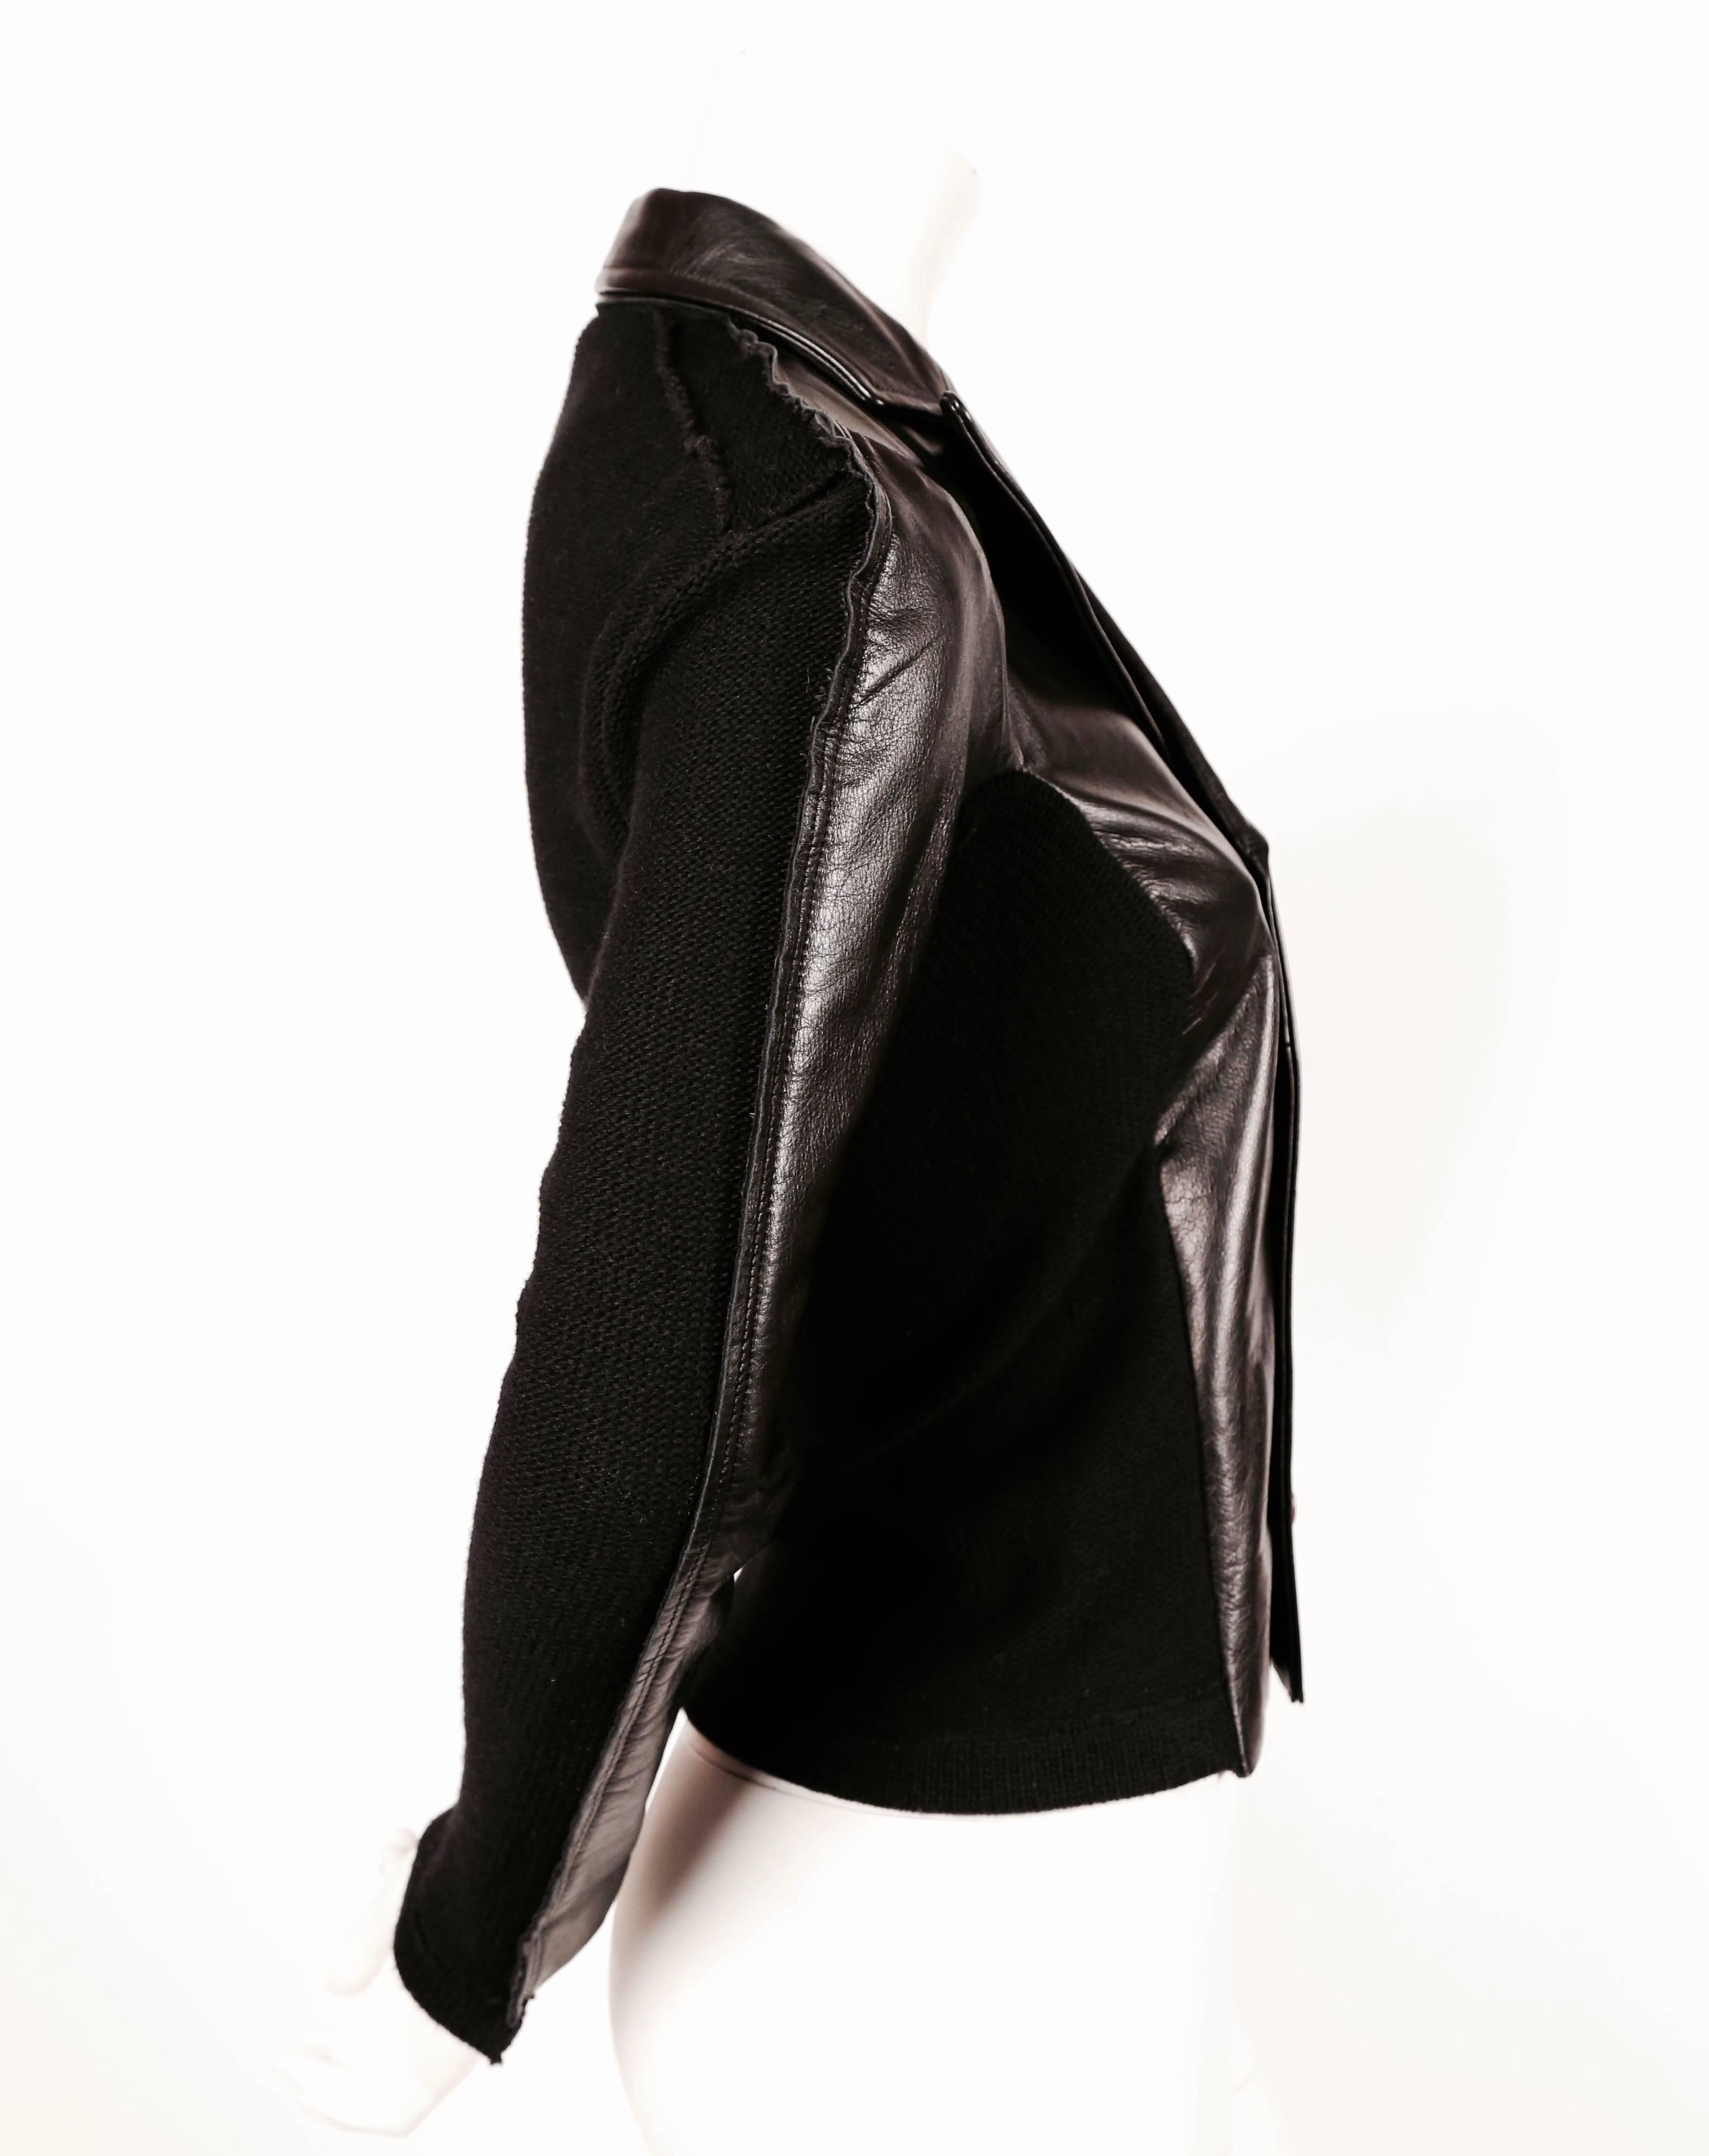 Black Comme Des Garcons leather jacket with knit back, 2002 